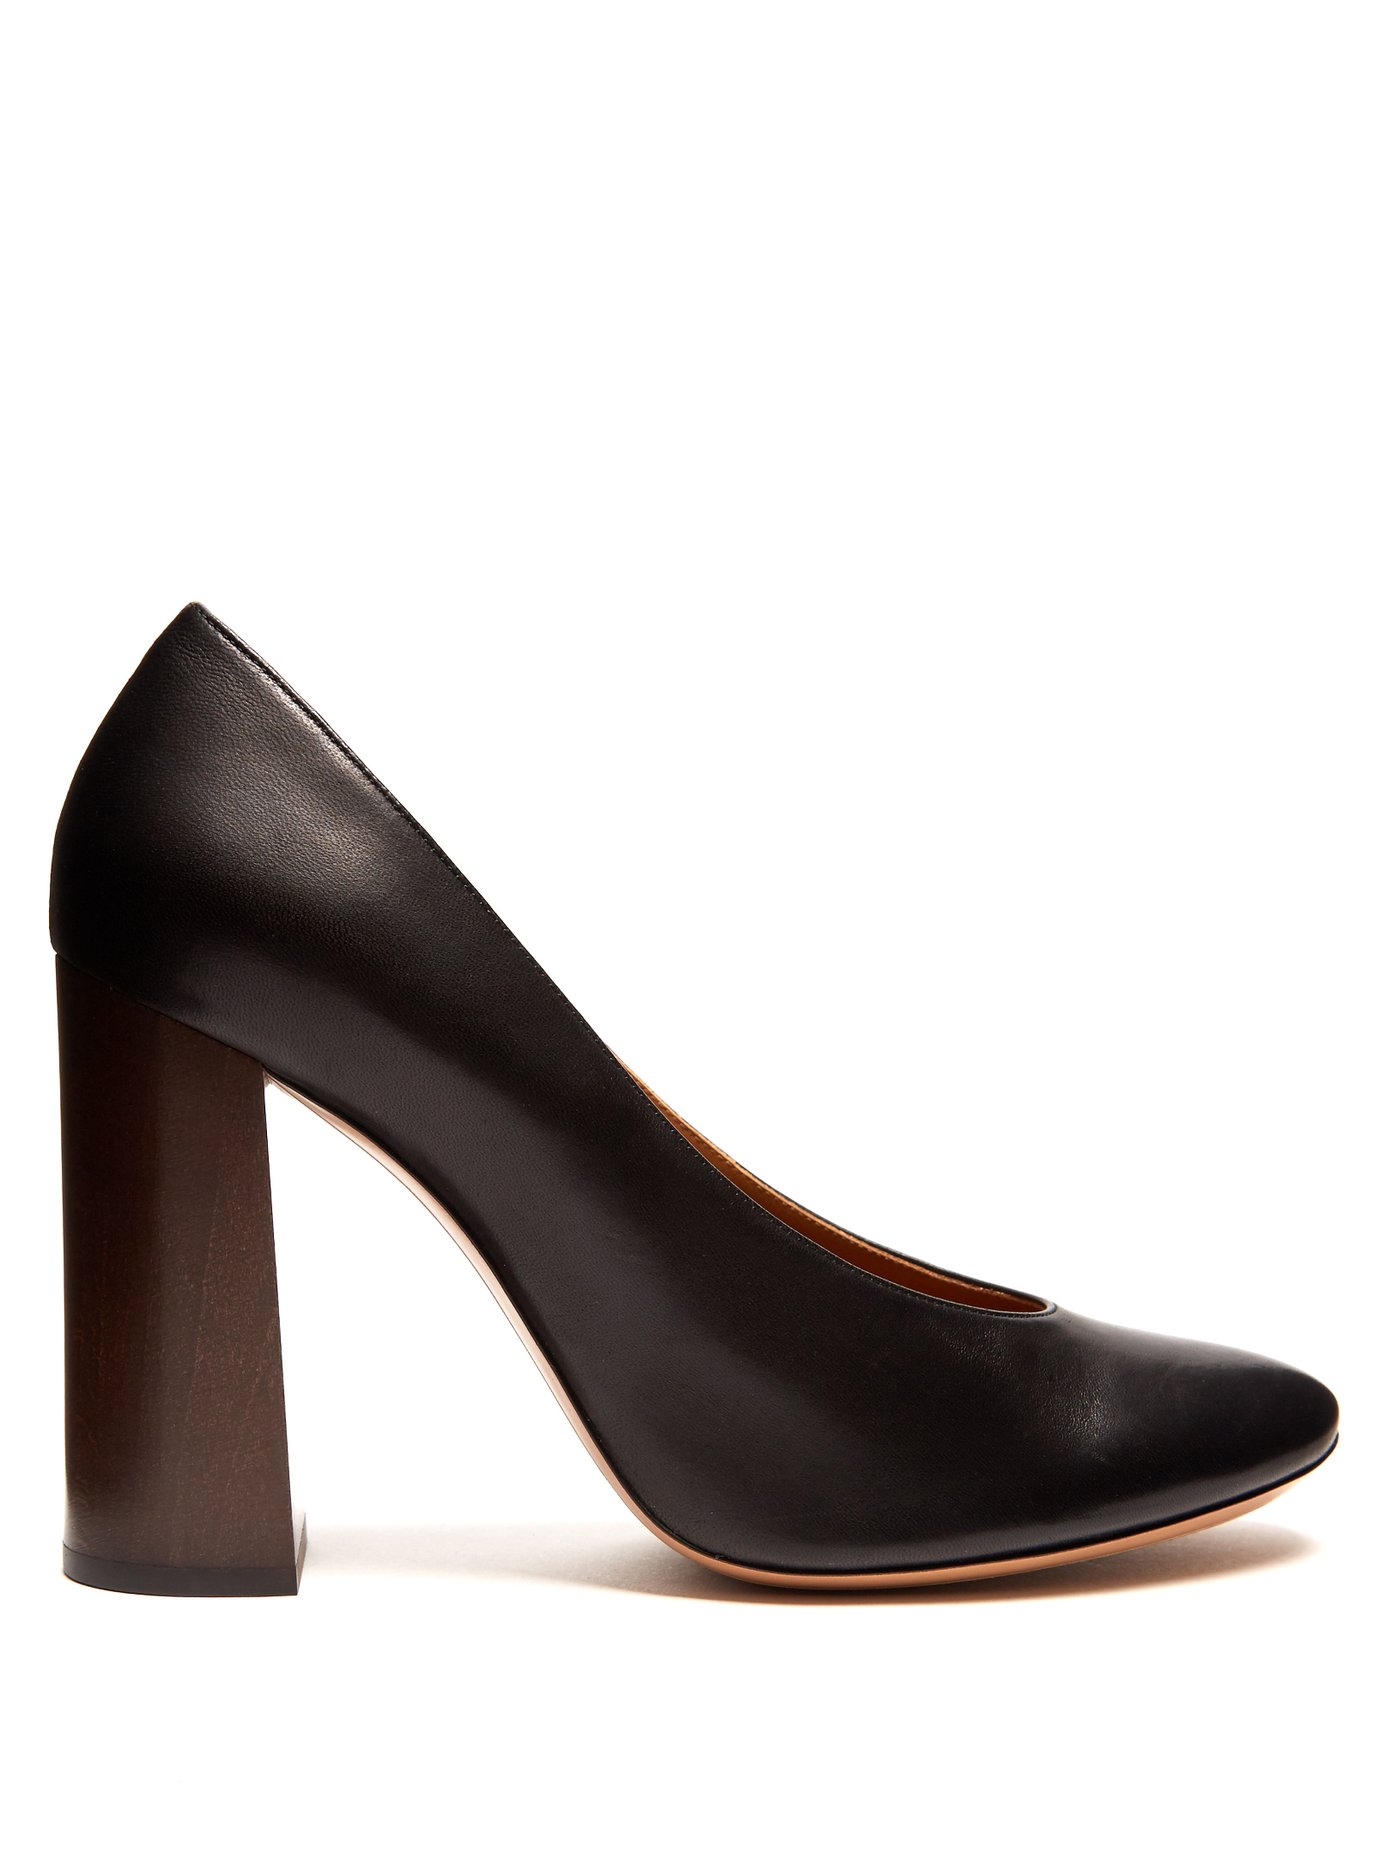 Harper block-heel leather pumps | Chloé 